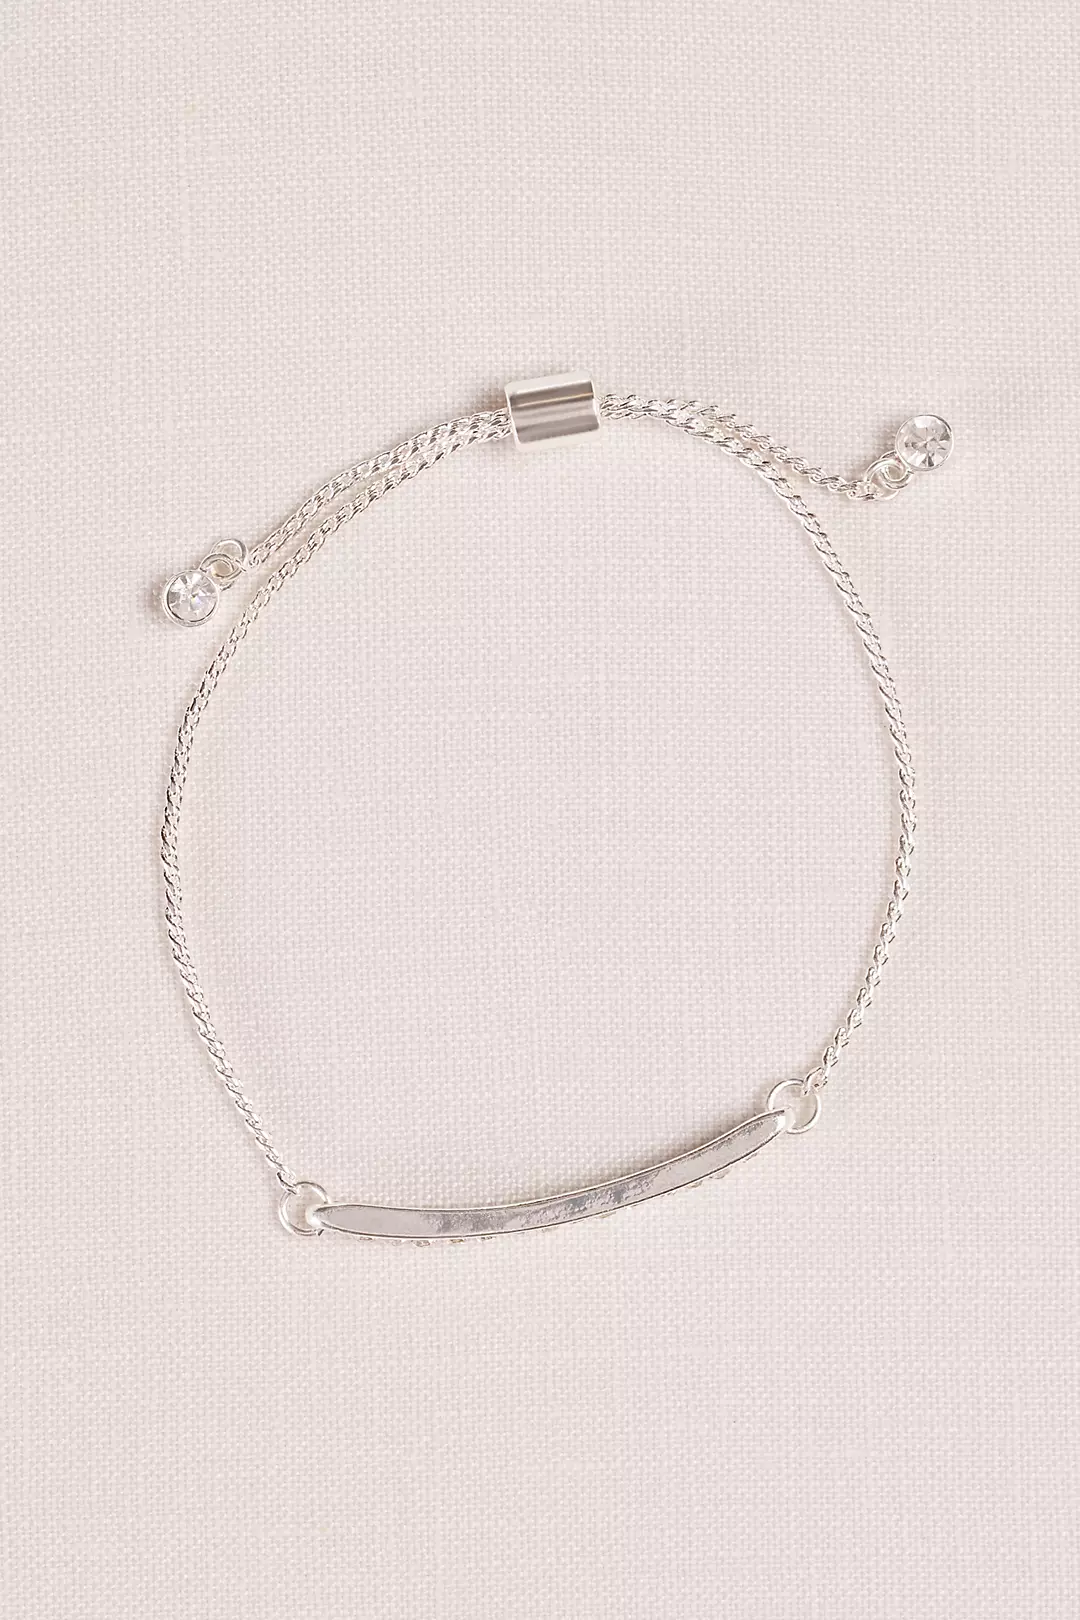 Crystal Bar Bracelet with Fringe Closure Image 2